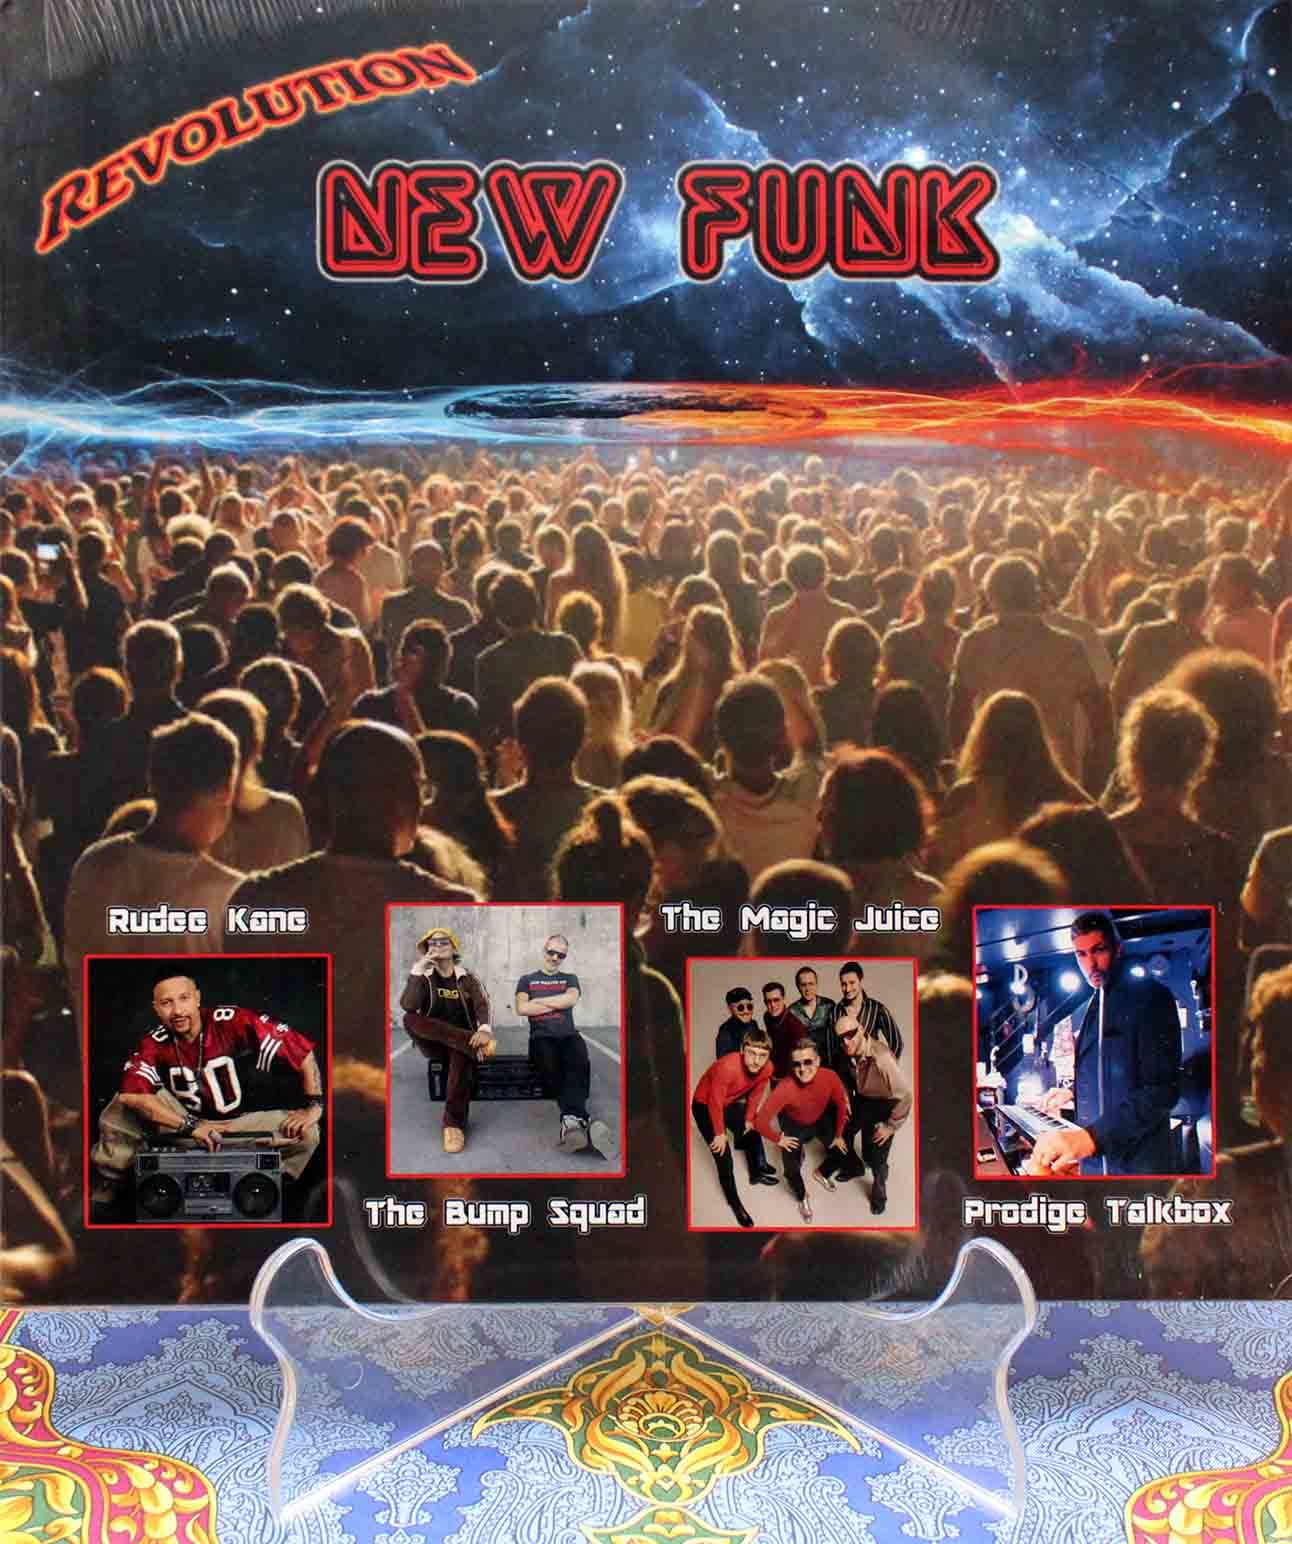 New Funk – Revolution 01